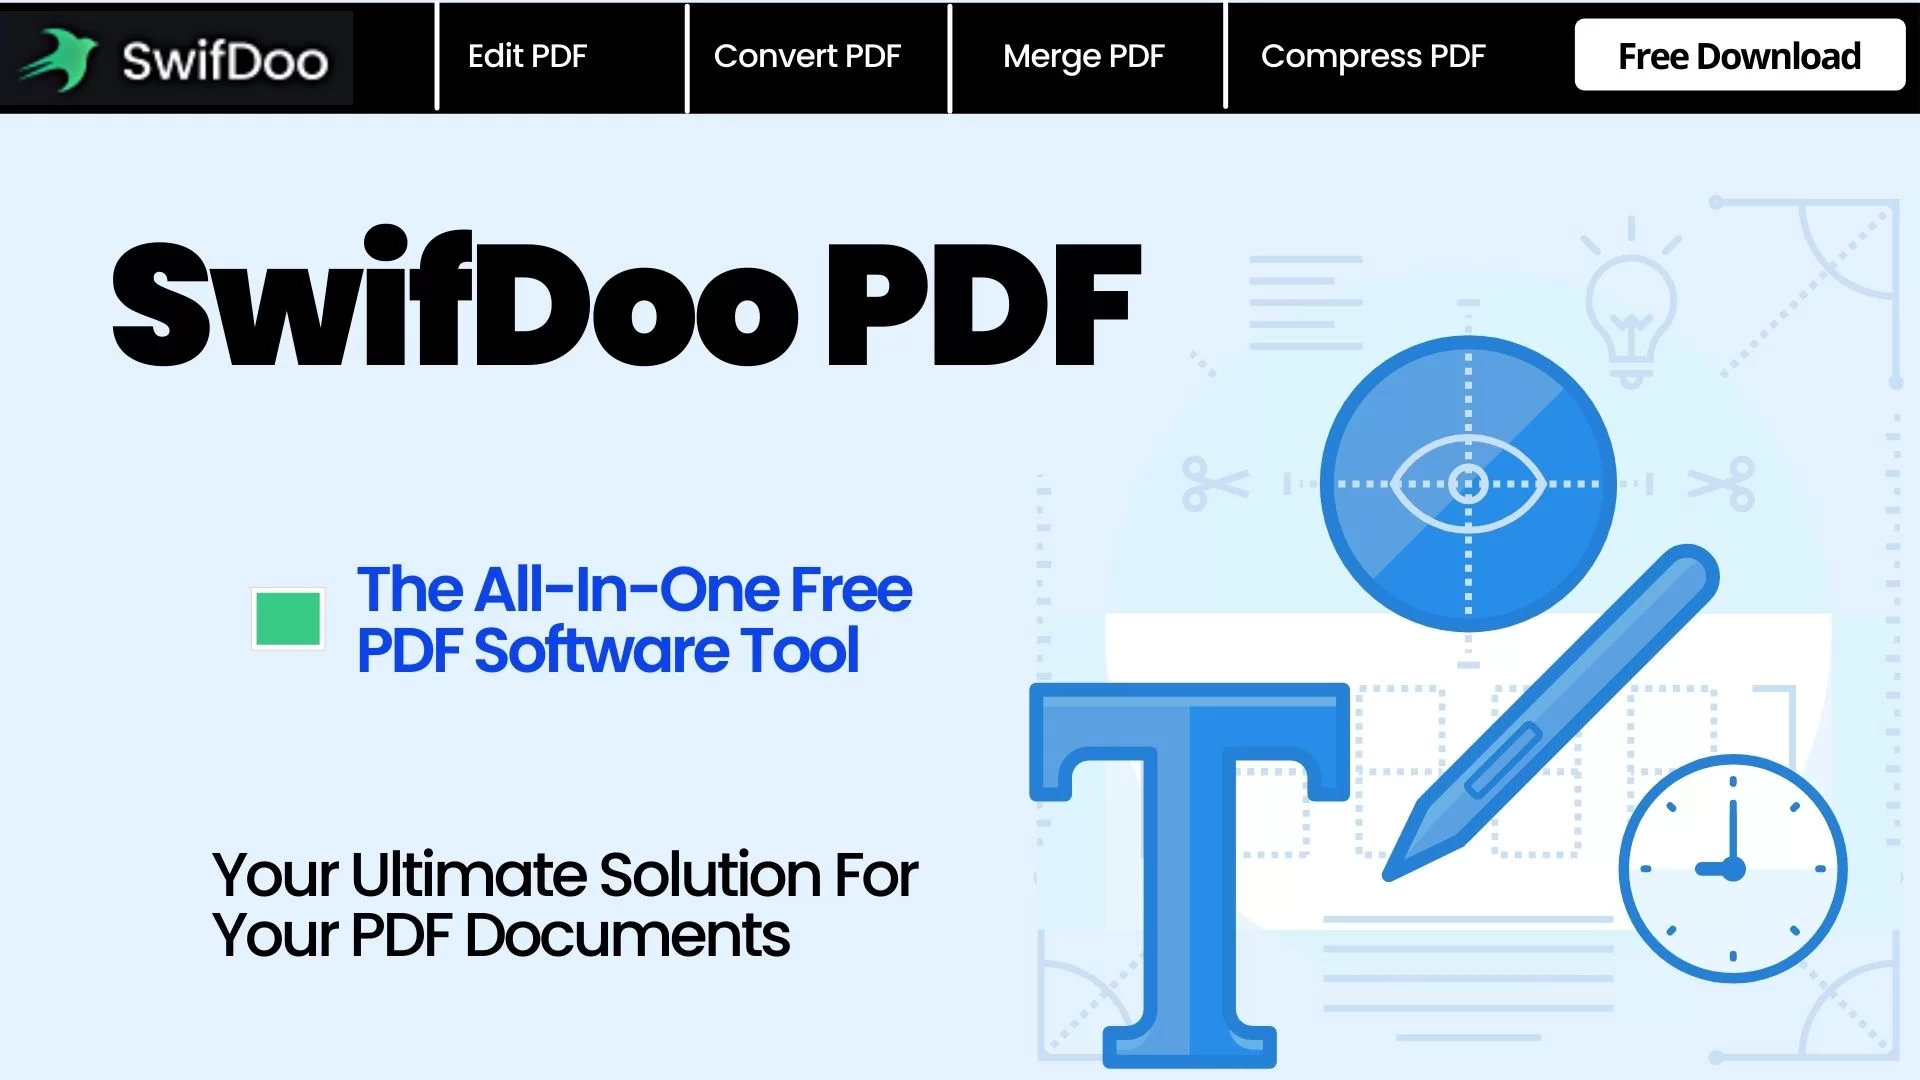 What Is SwifDoo PDF?